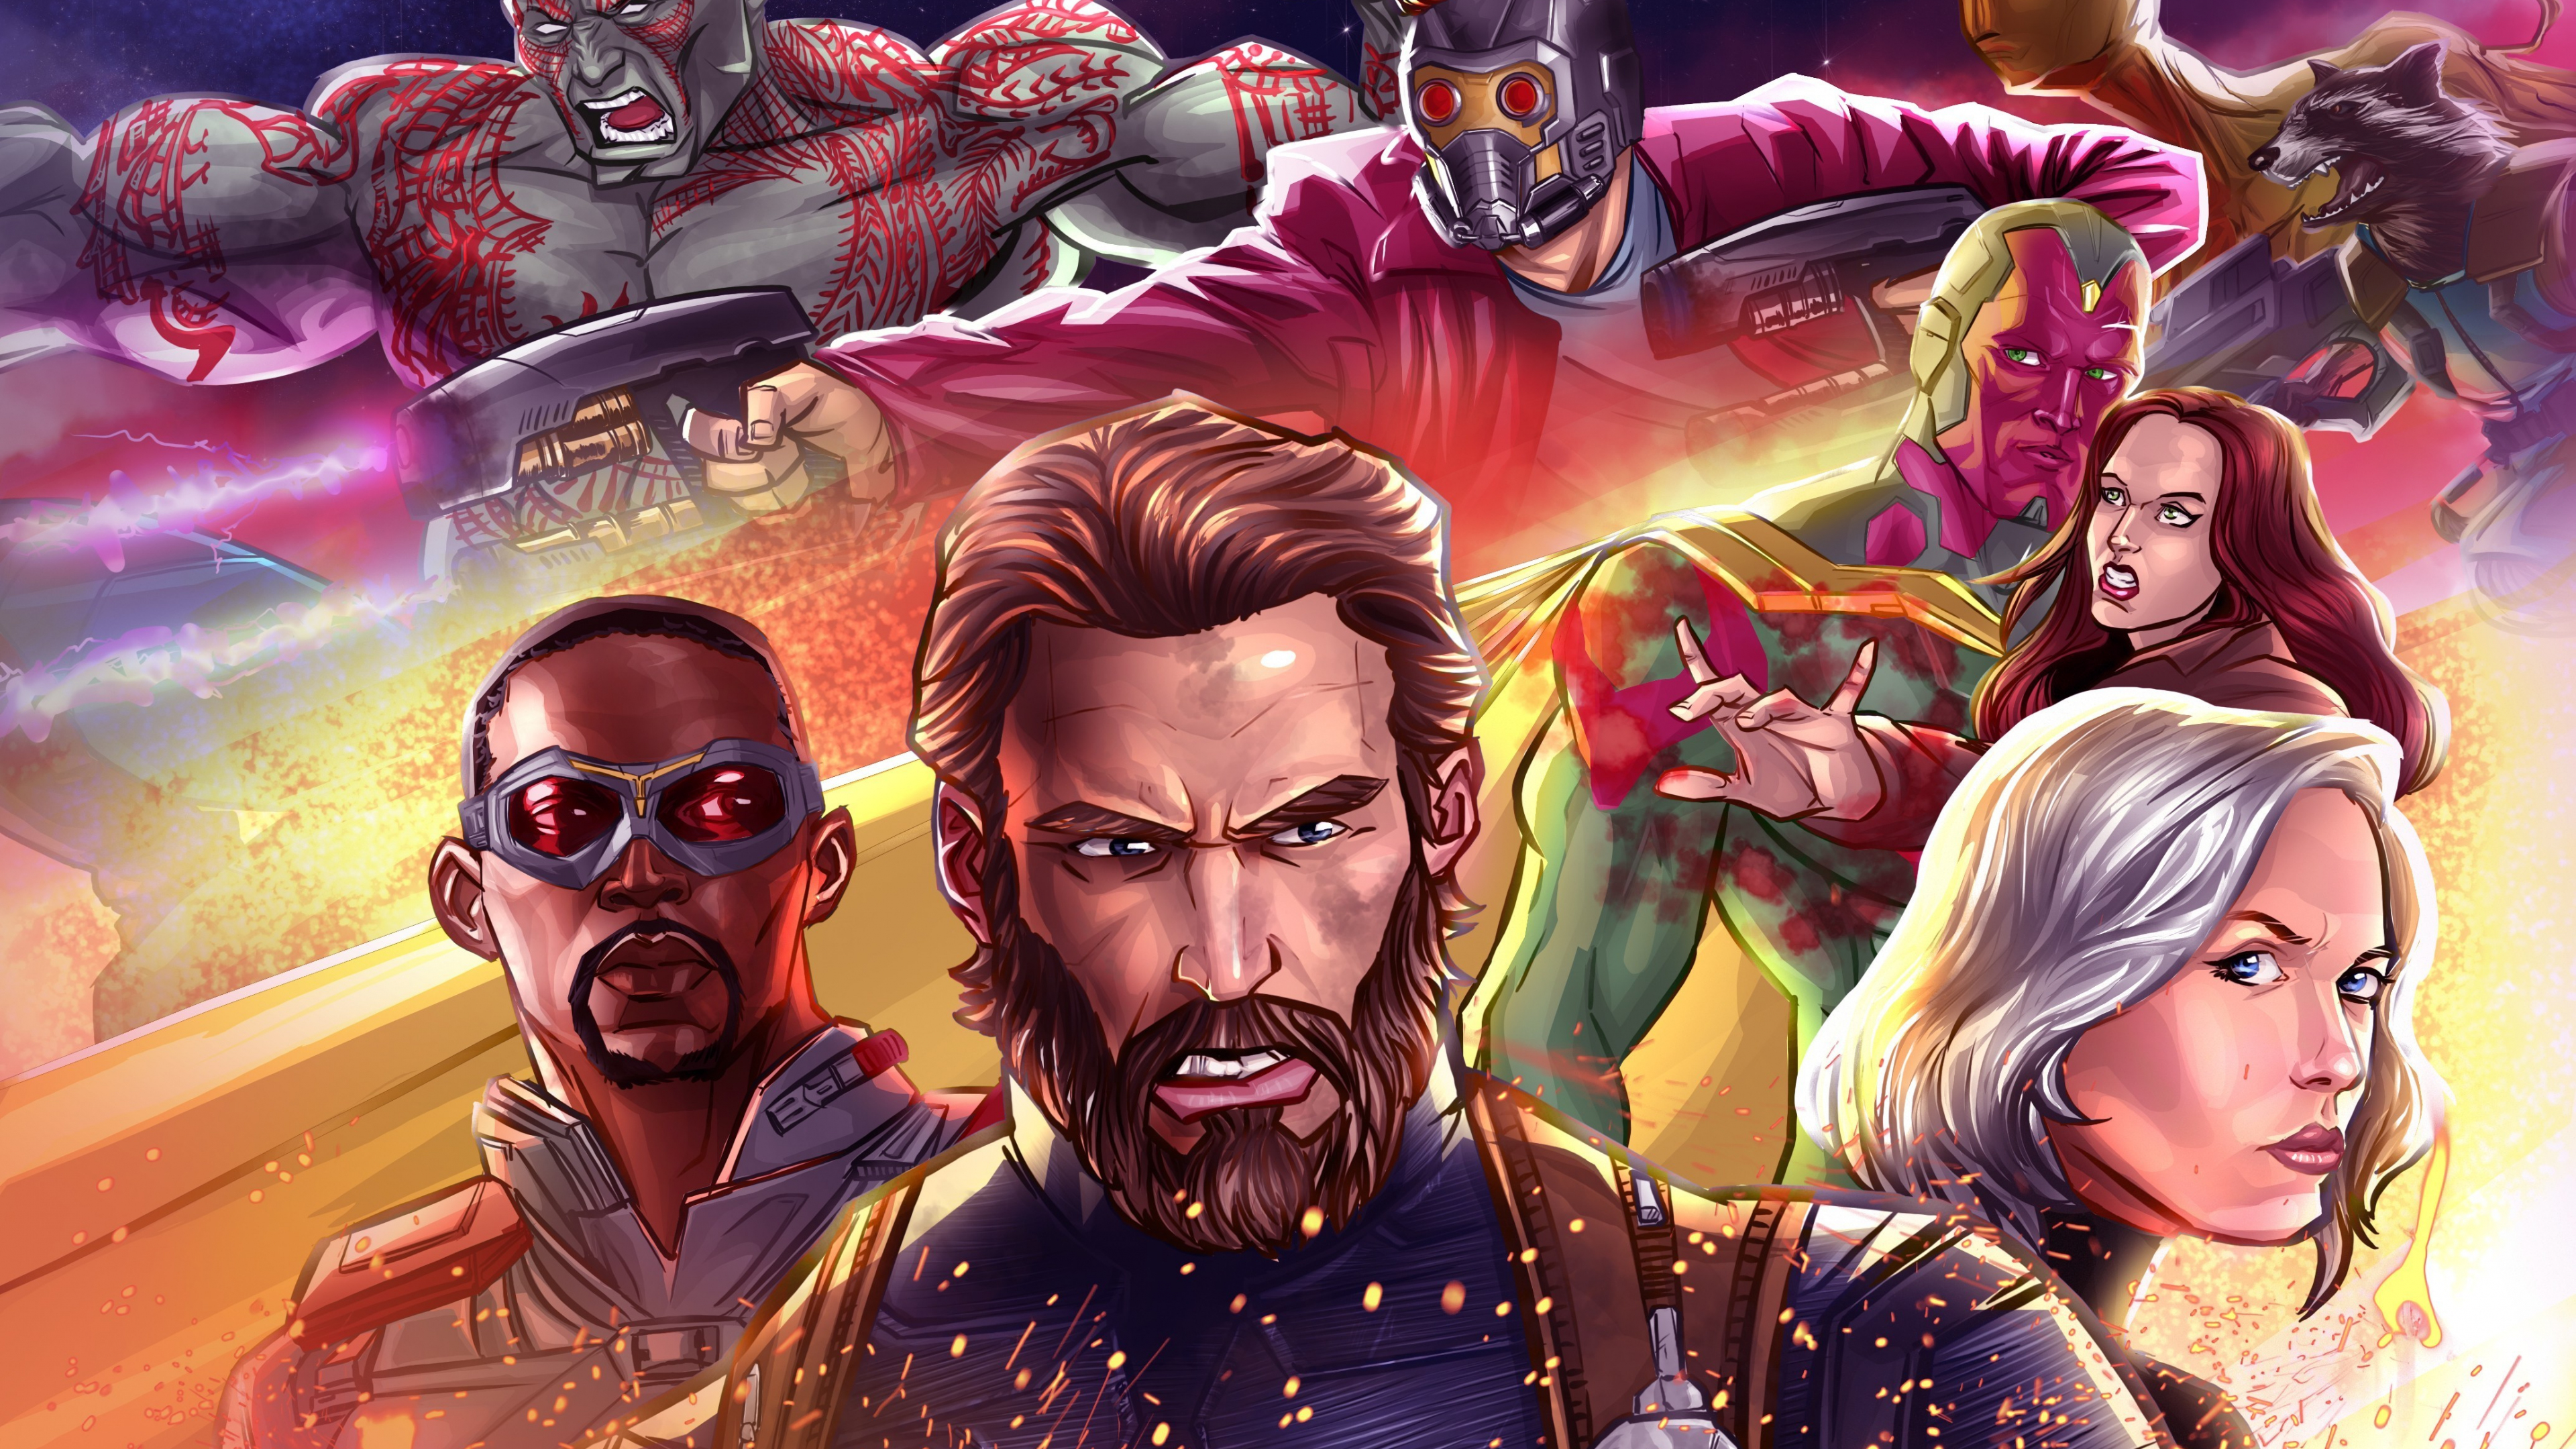 Download 3840x2160 Wallpaper Avengers: Infinity War, 2018 Movie, Captain  America, 4k, 4 K, Uhd 16:9, Widescreen, 3840x2160 Hd Image, Background,  27970